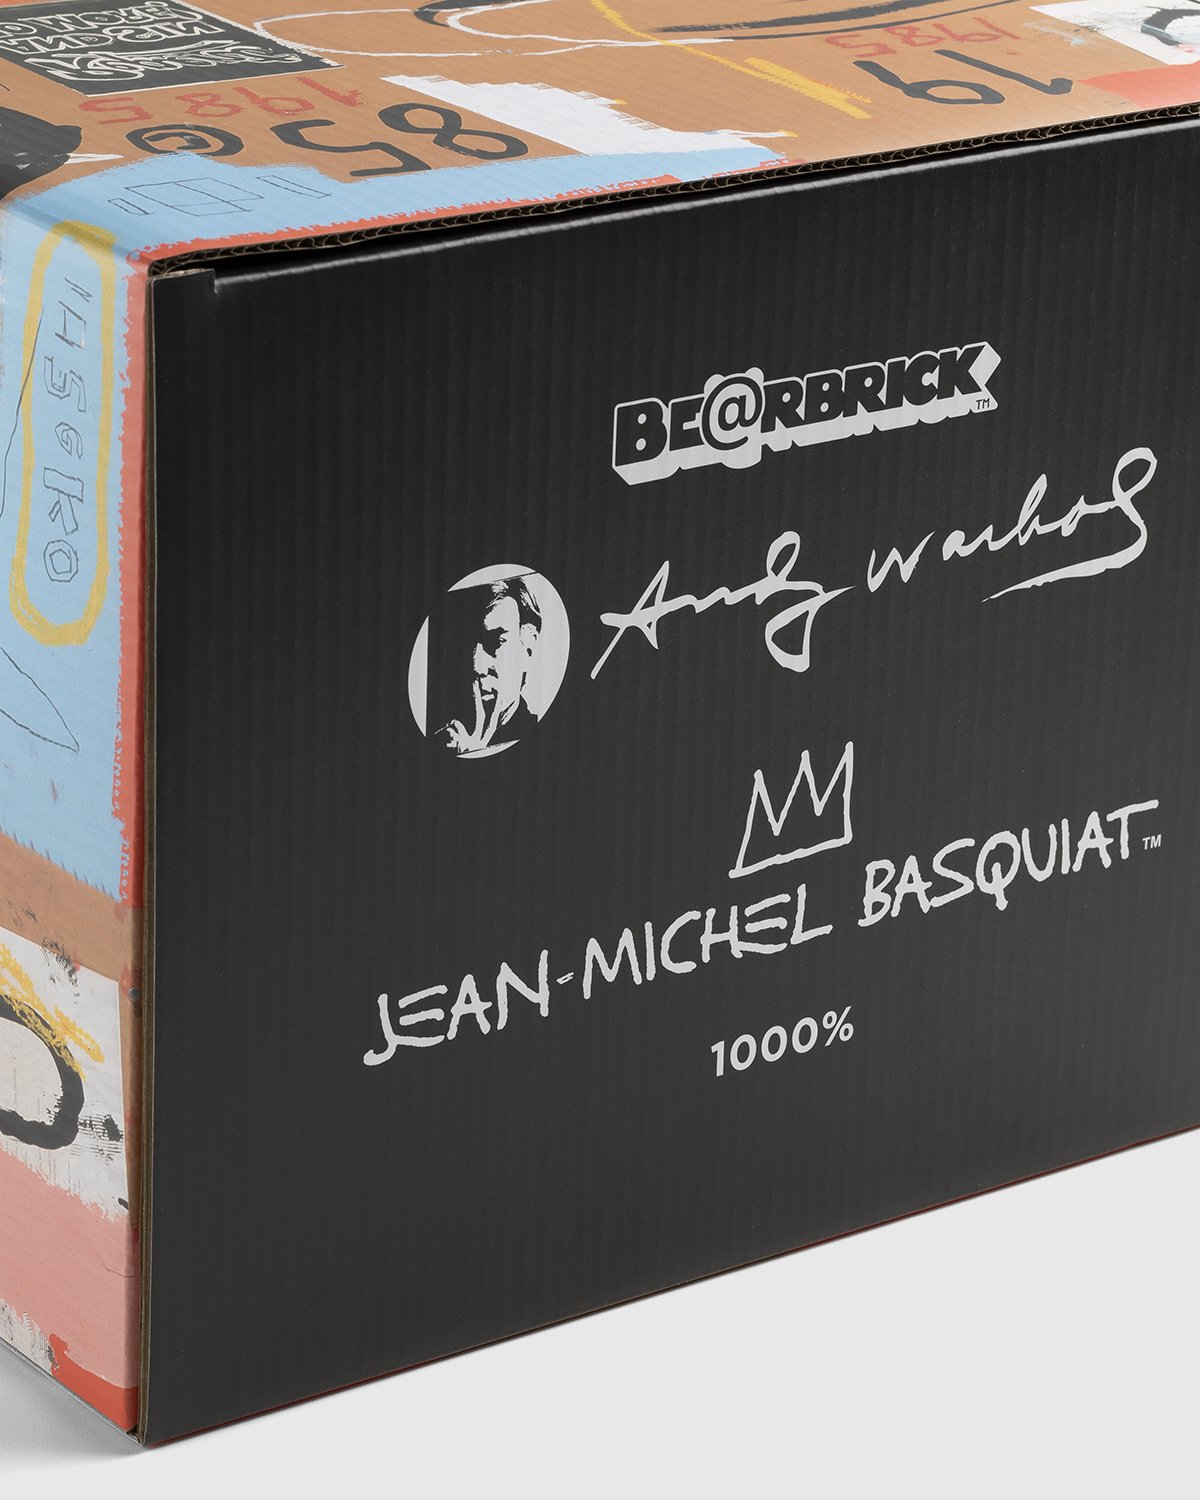 Medicom - Be@rbrick Andy Warhol x Jean-Michel Basquiat #2 1000% Multi - Lifestyle - Multi - Image 6